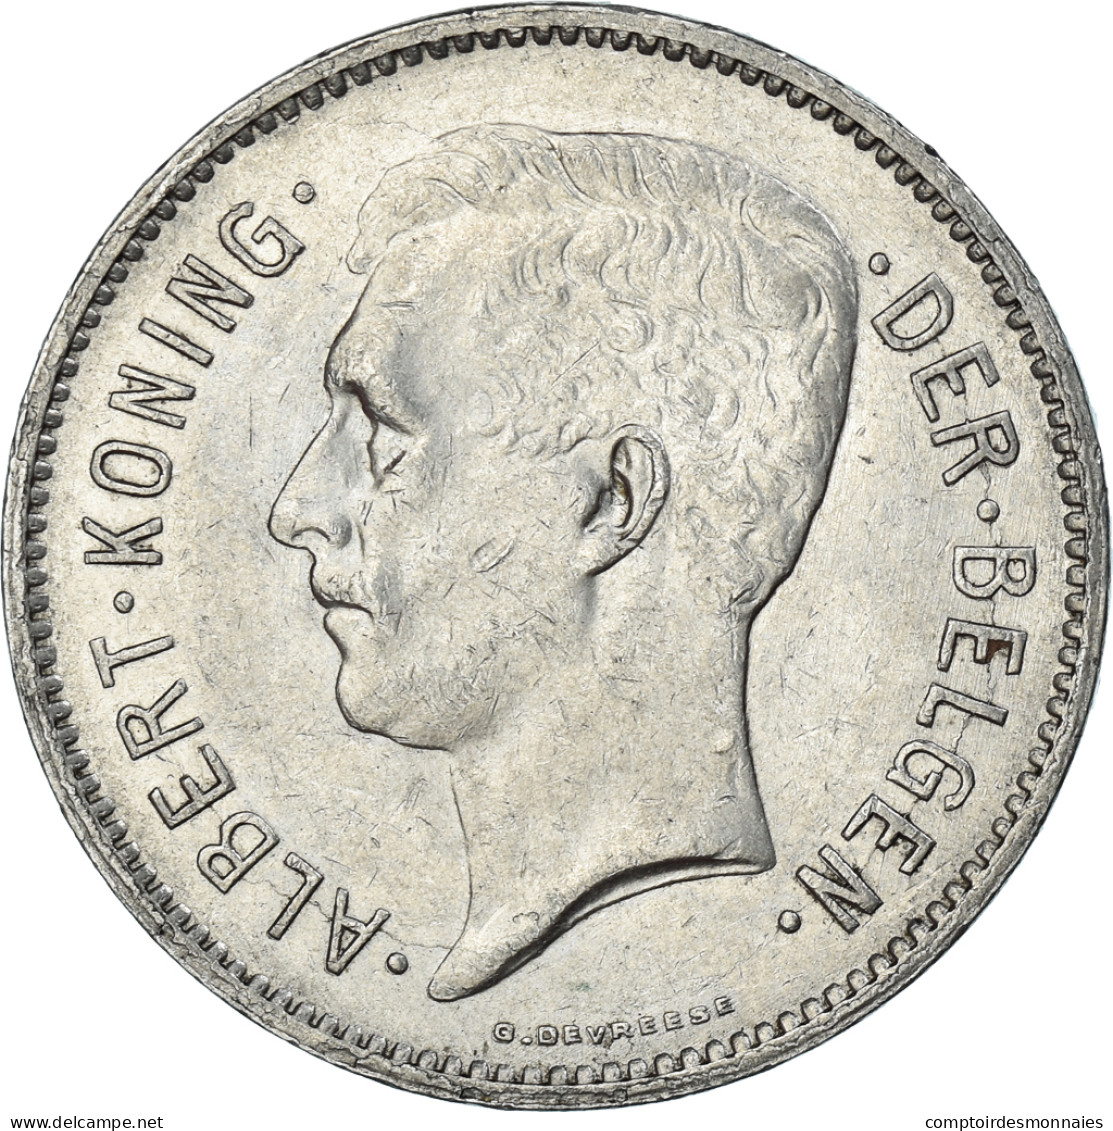 Monnaie, Belgique, 5 Francs, 5 Frank, 1933 - 5 Frank & 1 Belga